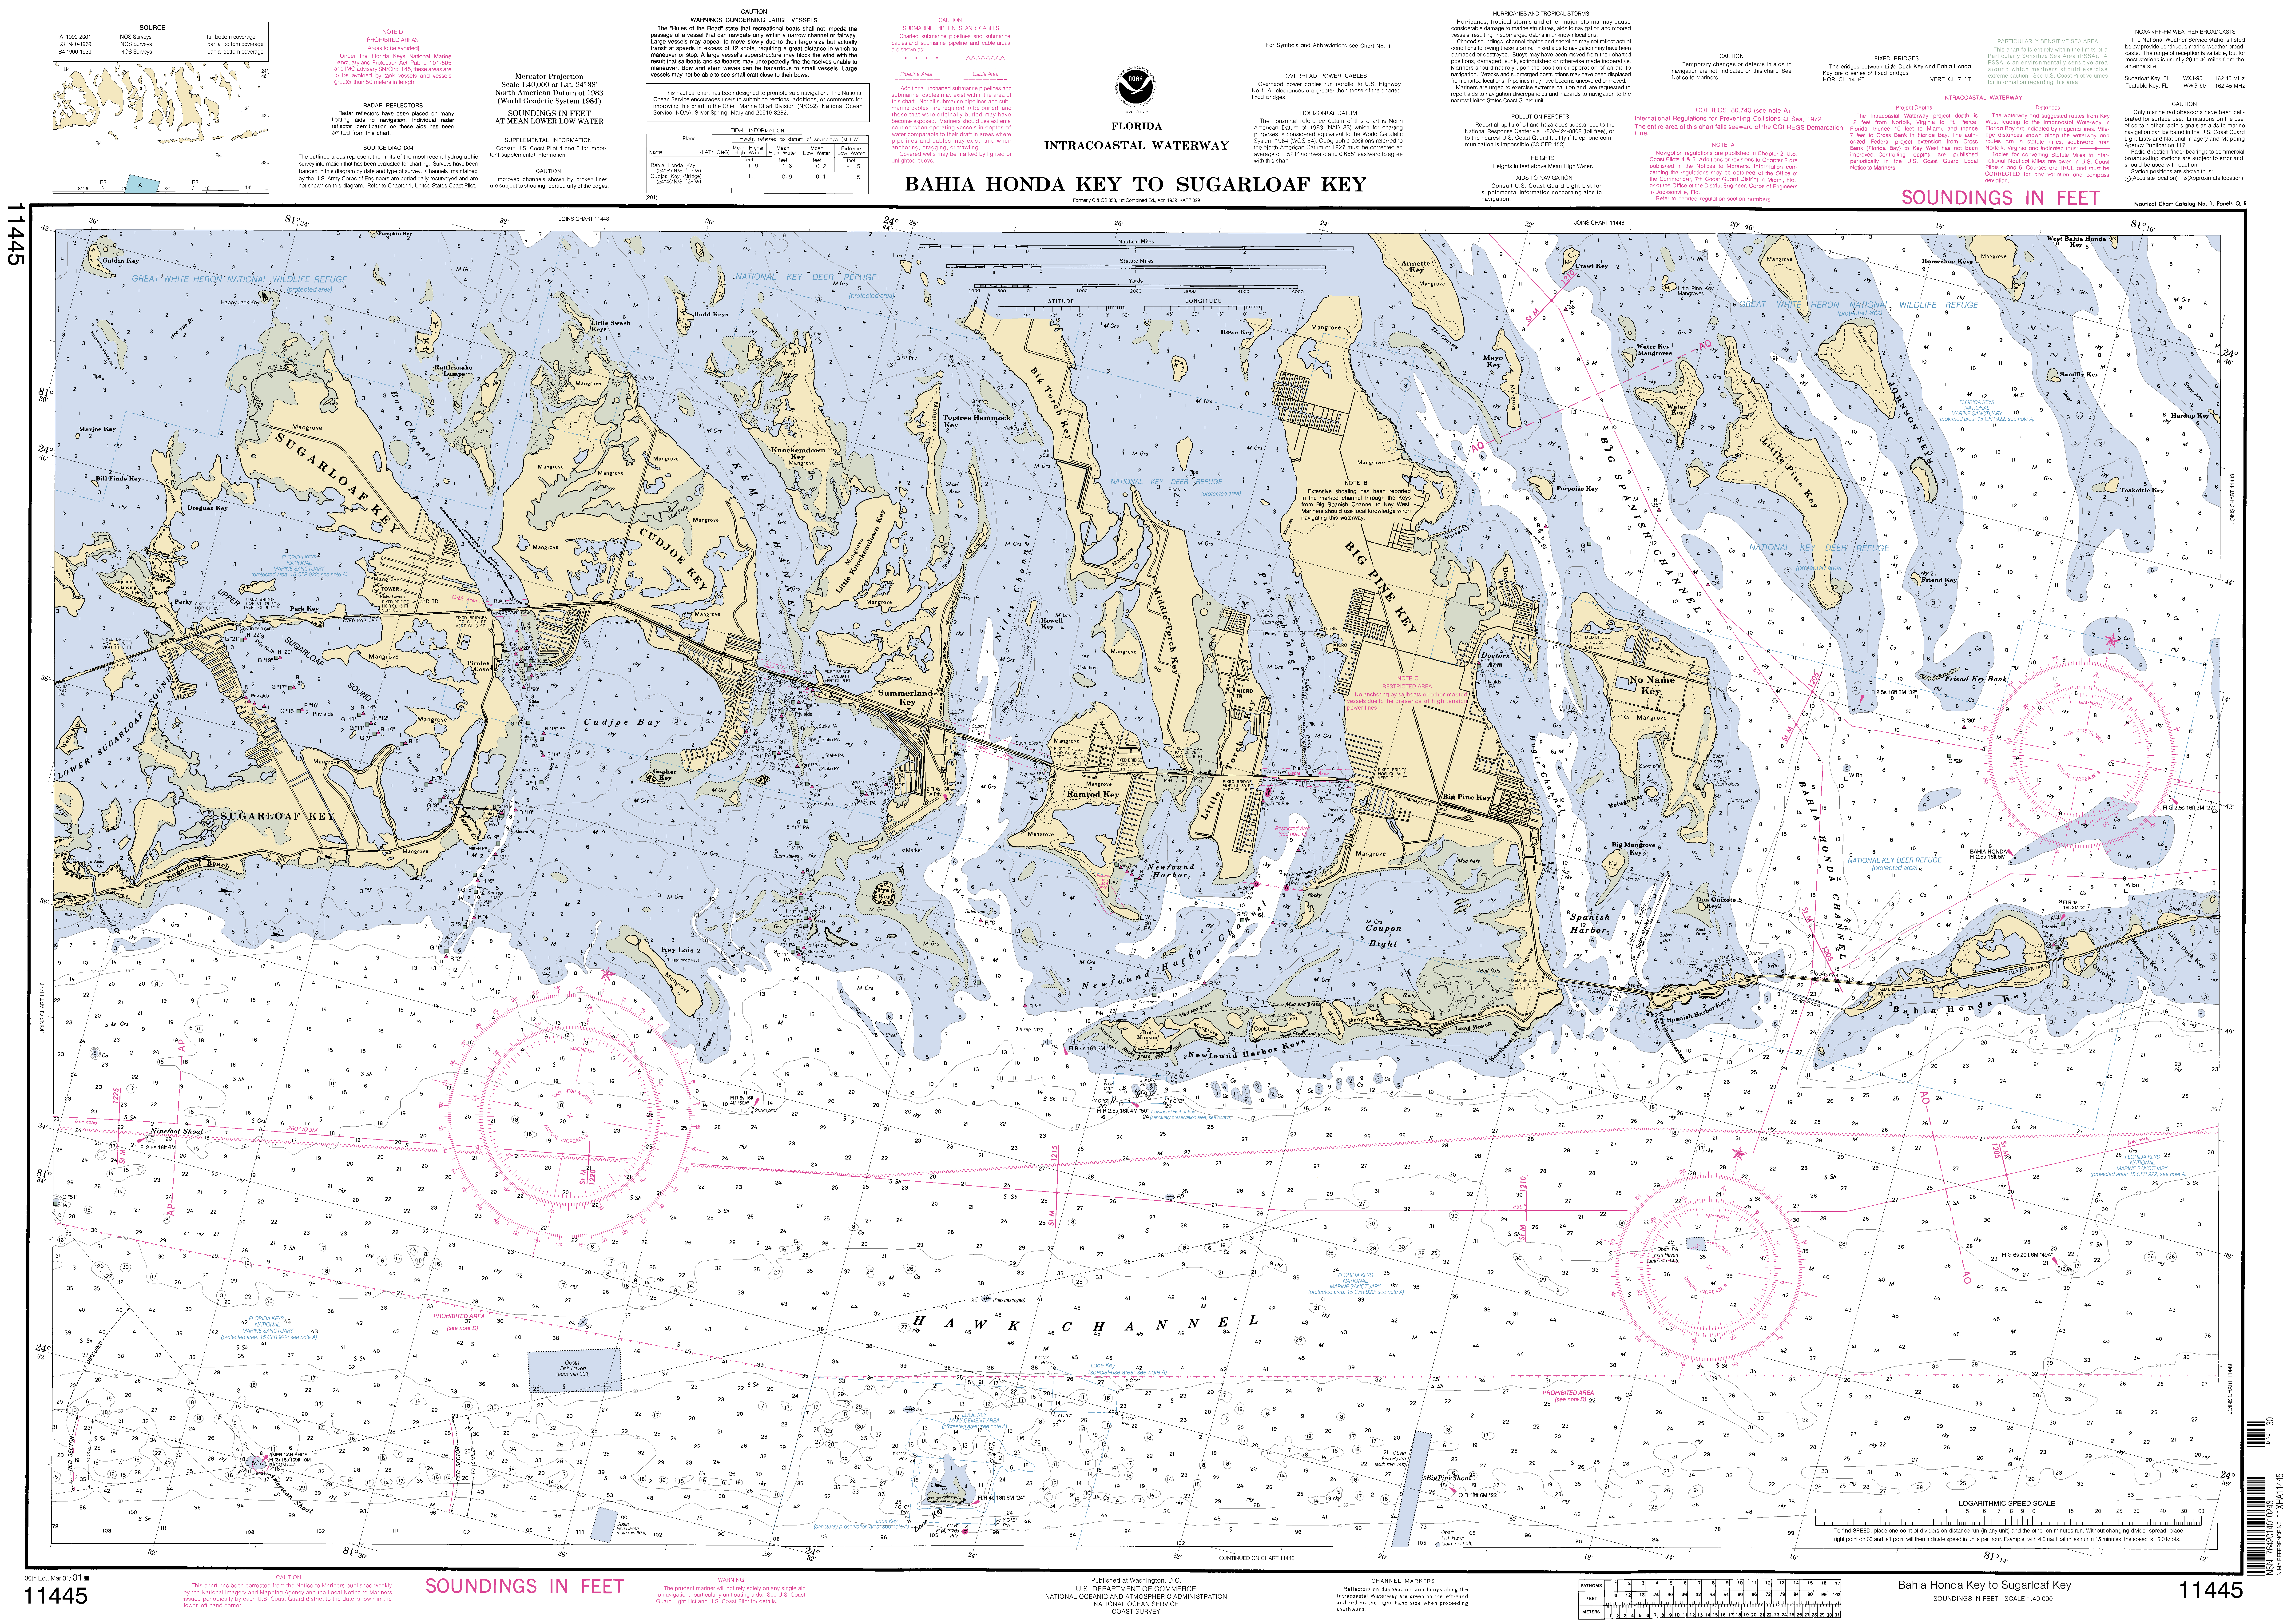 Bahia Honda Key To Sugarloaf Key Nautical Chart - Νοαα Charts - Maps - Florida Keys Marine Map